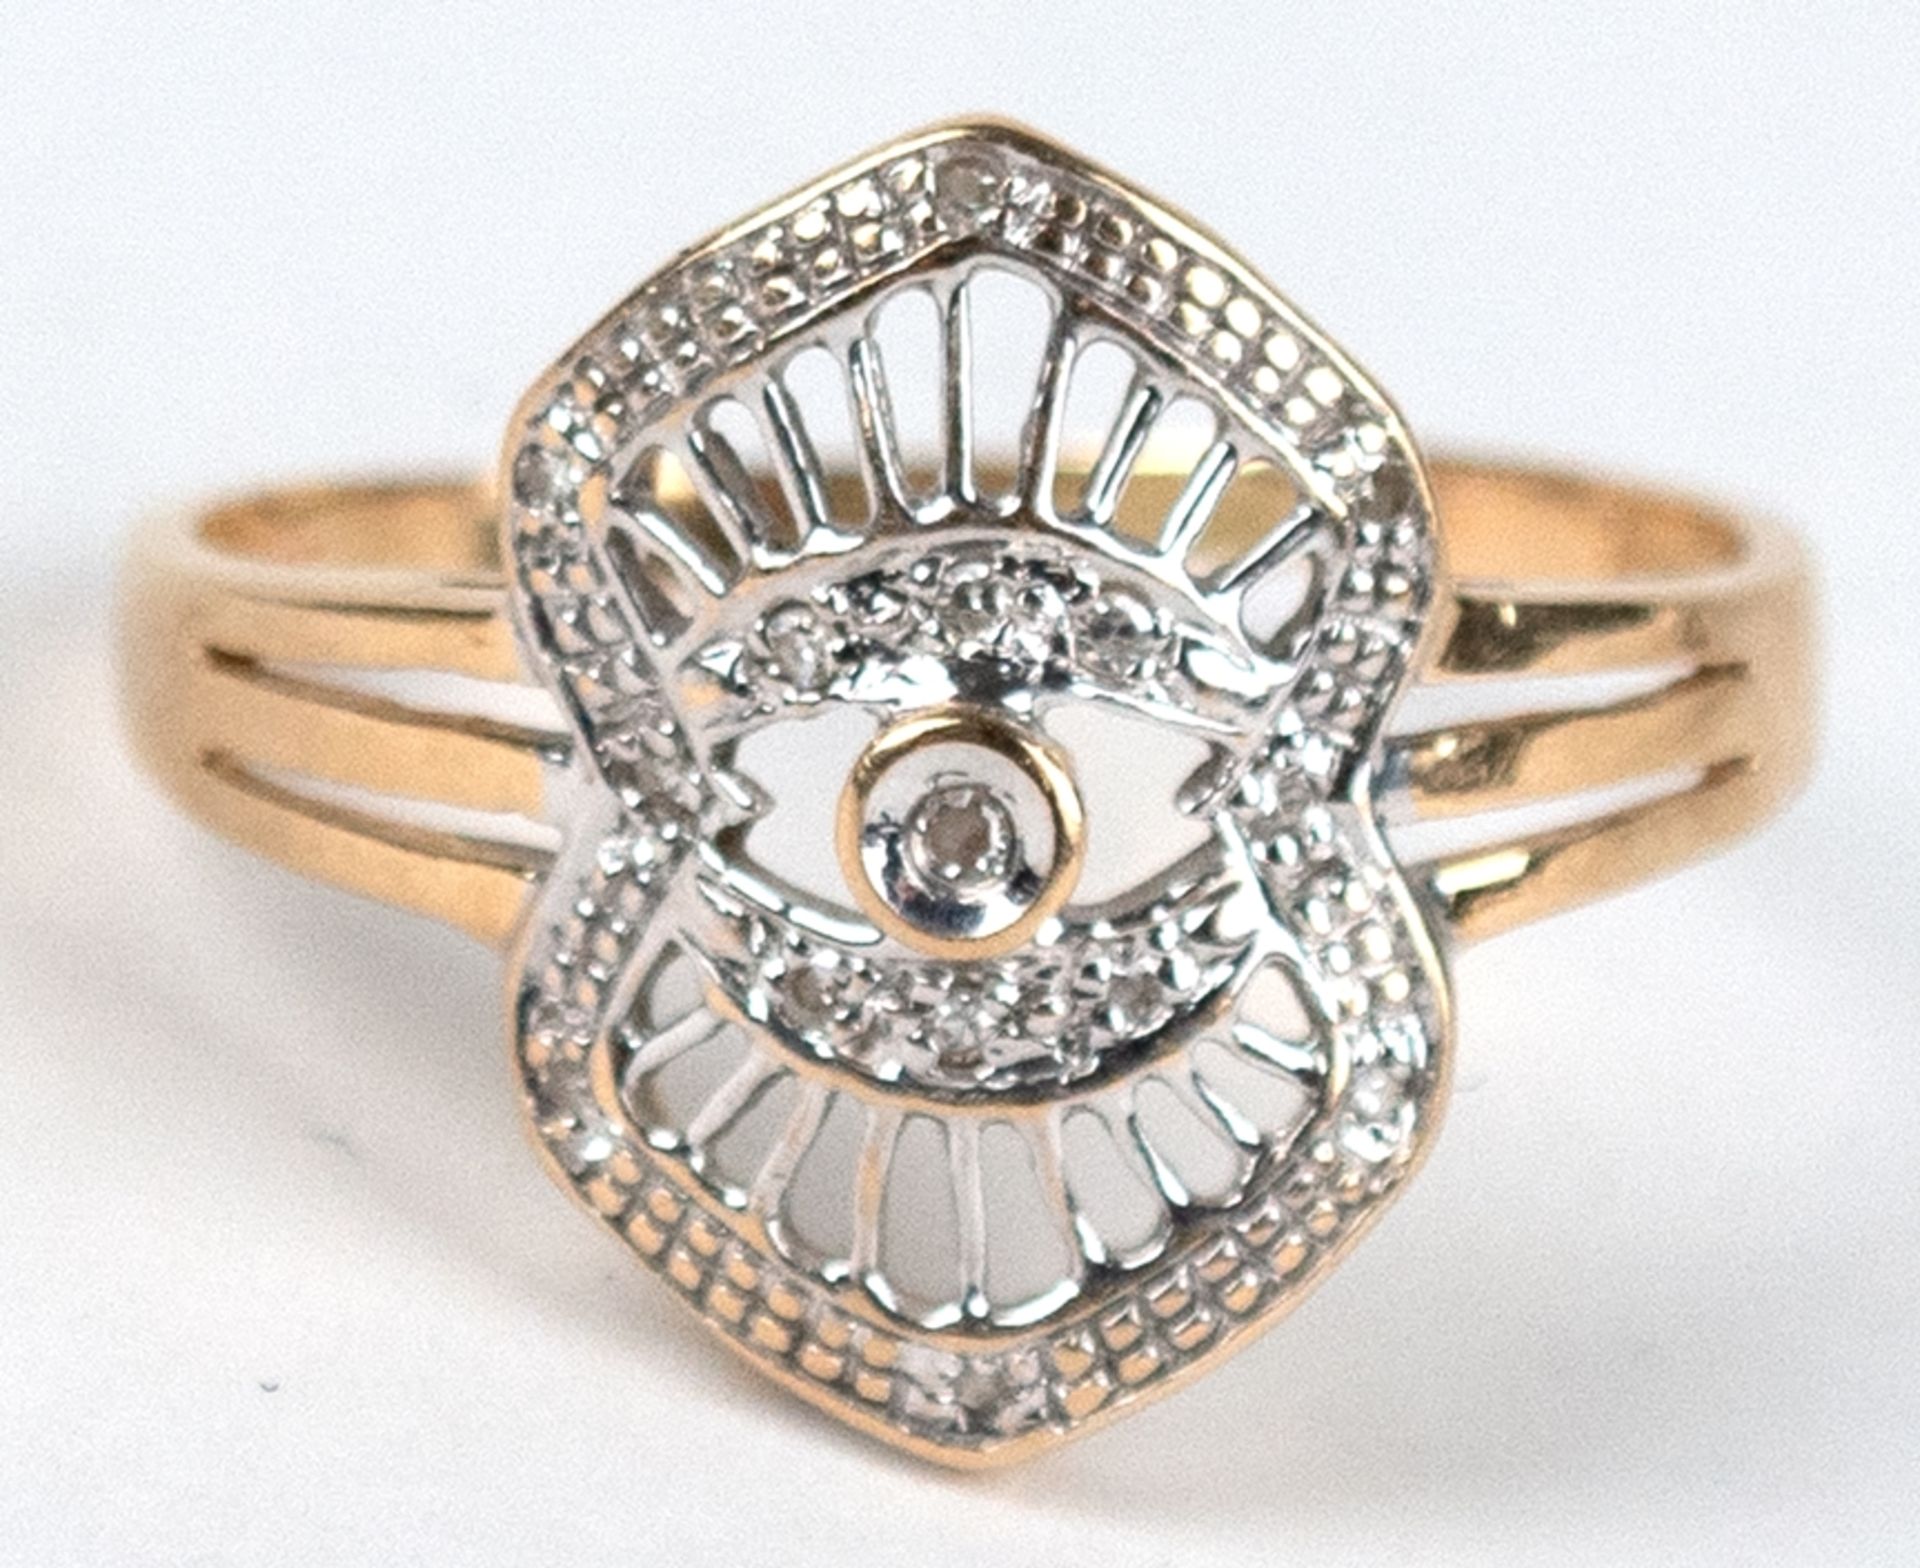 Ring, 585er GG/WG, durchbrochener Ringkopf besetzt mit Diamanten, ges. 3,1 g, RG 62